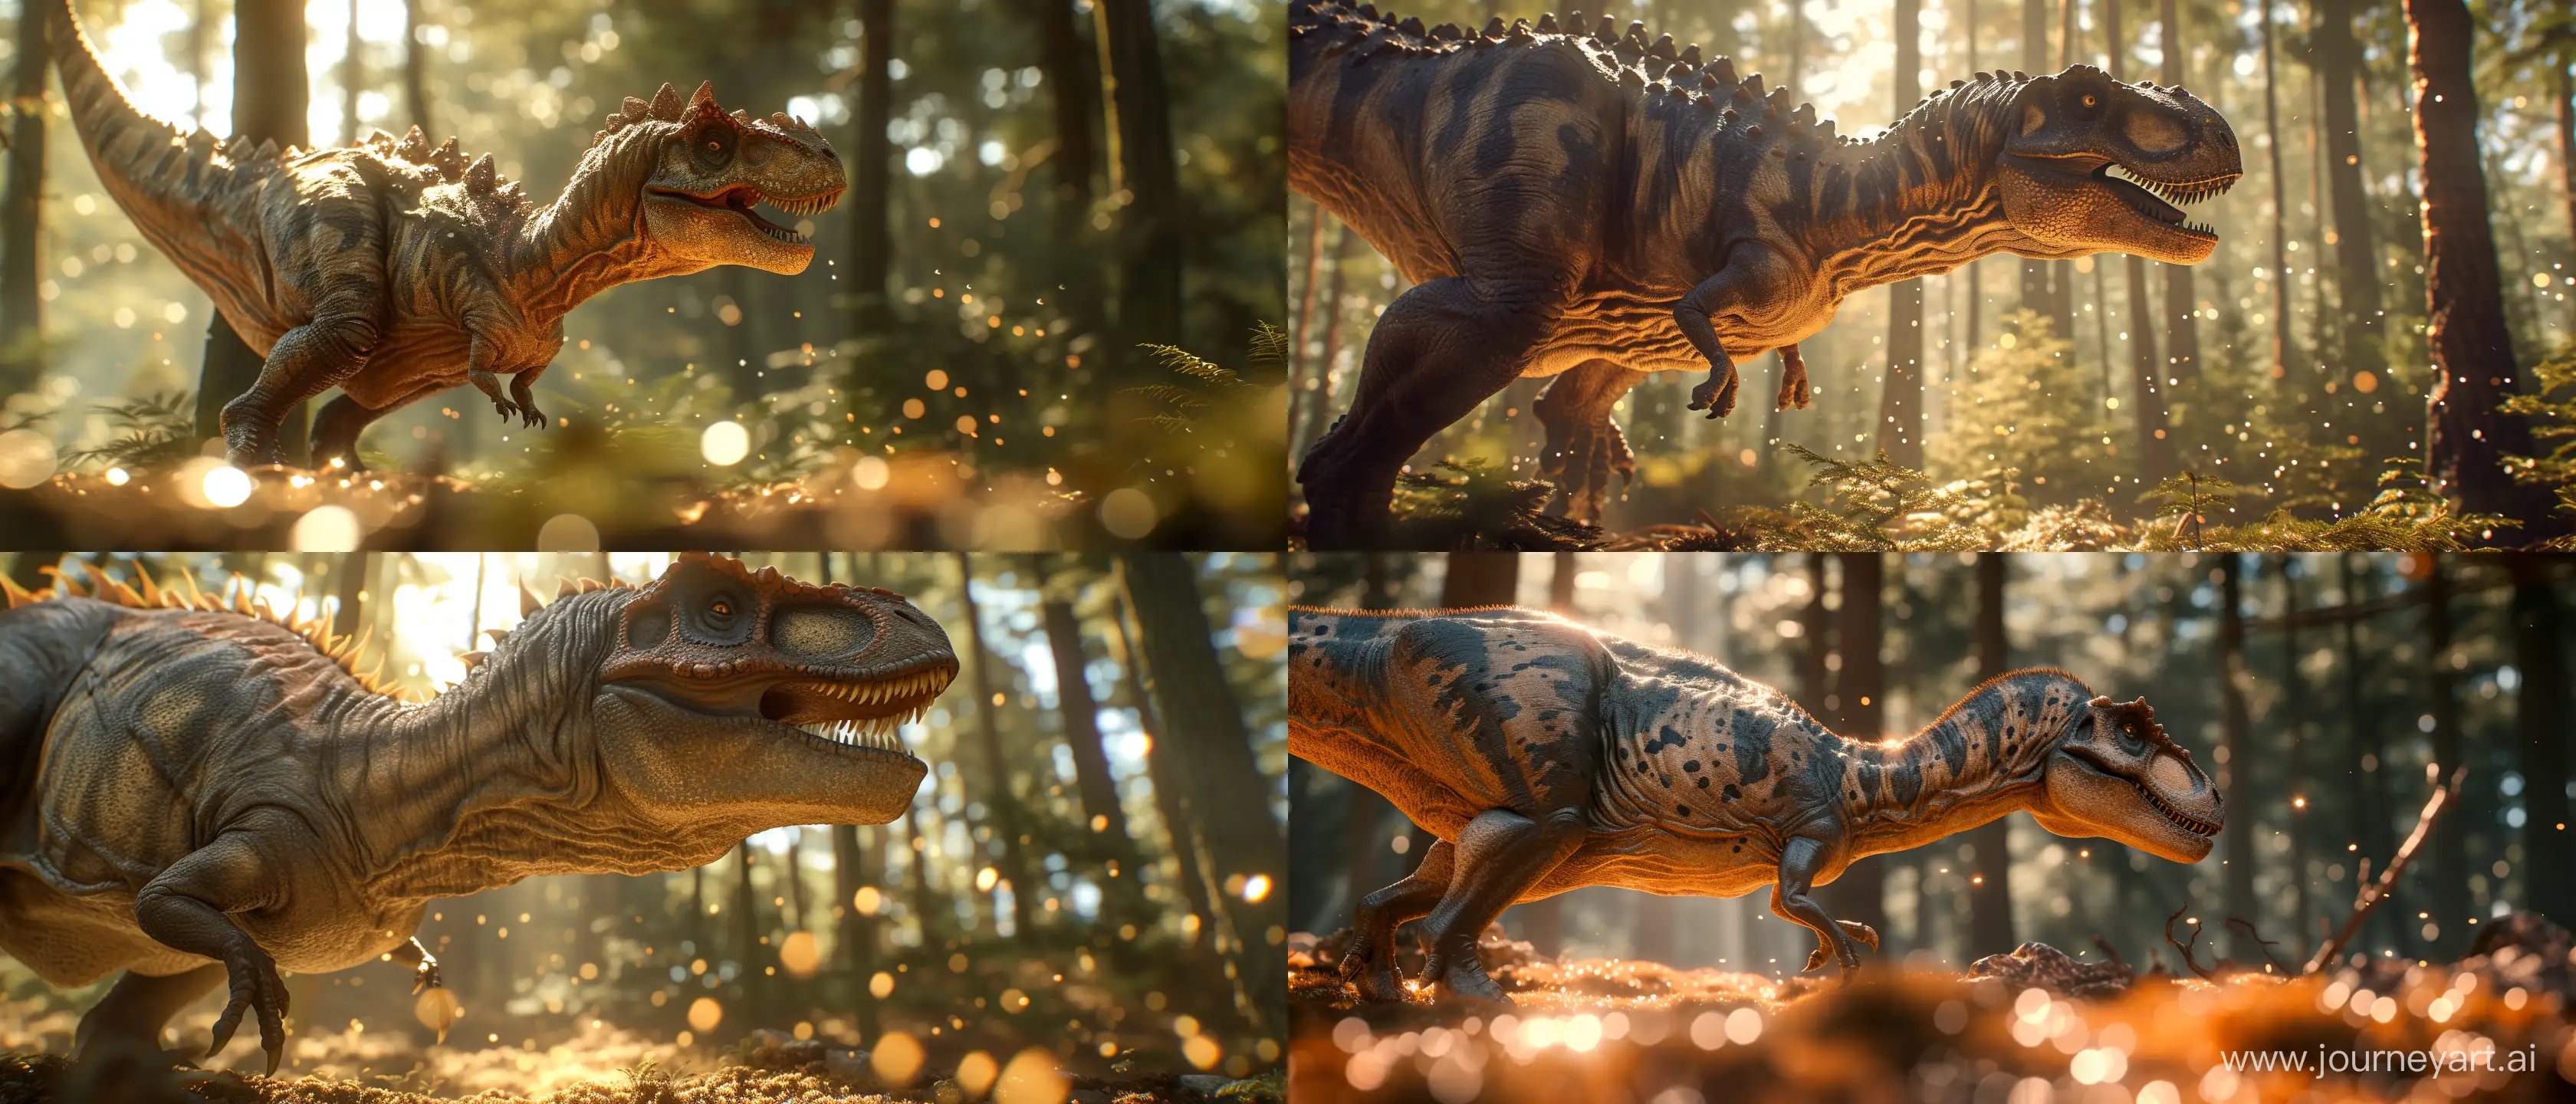 HyperRealistic-Dinosaur-Forest-Scene-with-Absurd-32k-Detailing